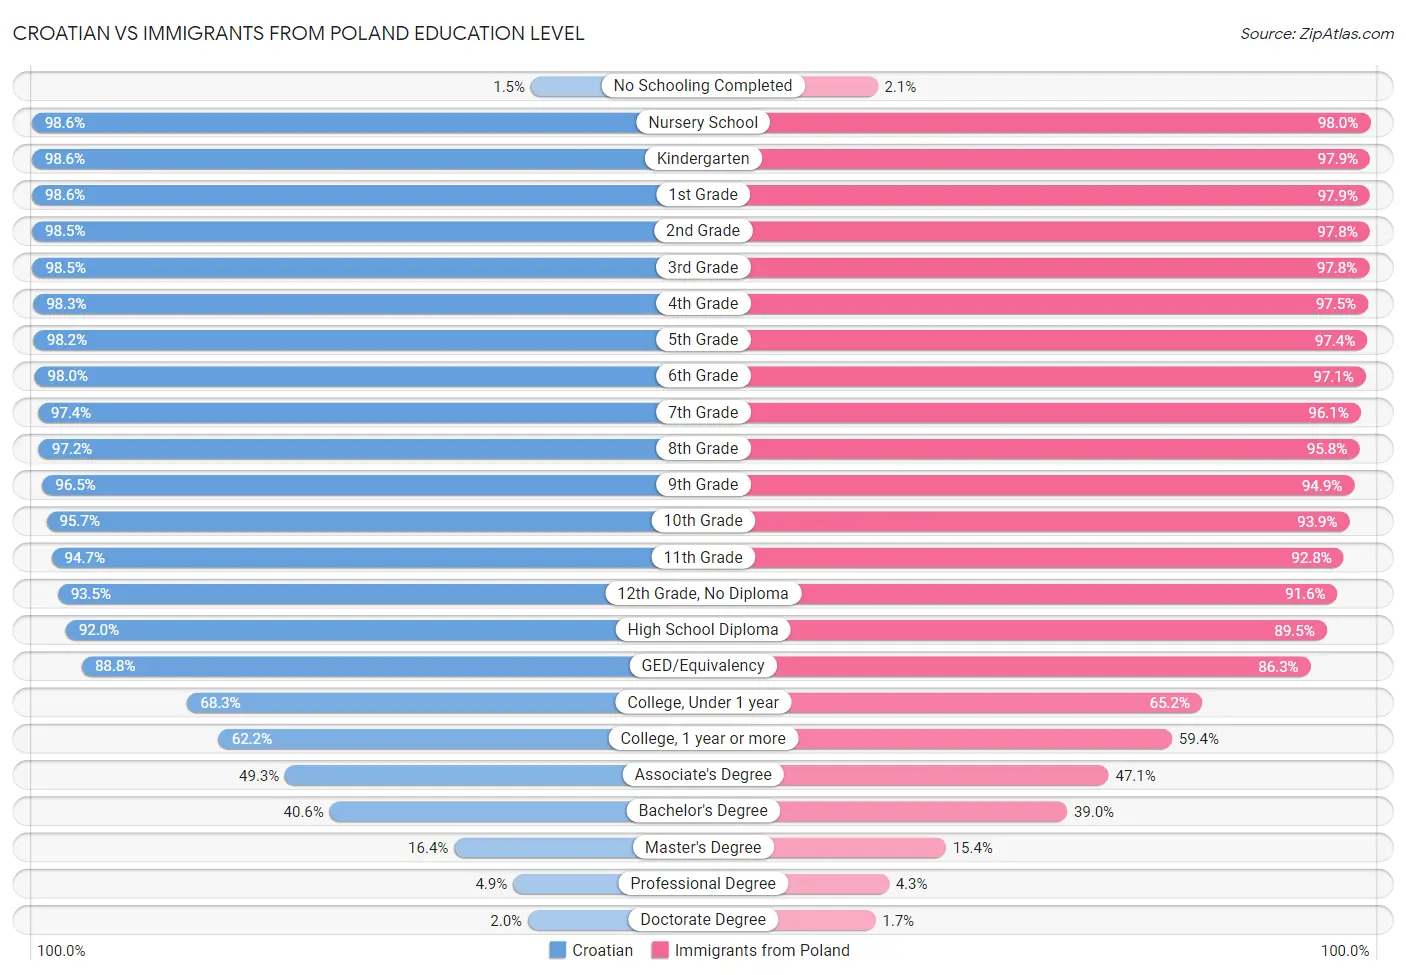 Croatian vs Immigrants from Poland Education Level